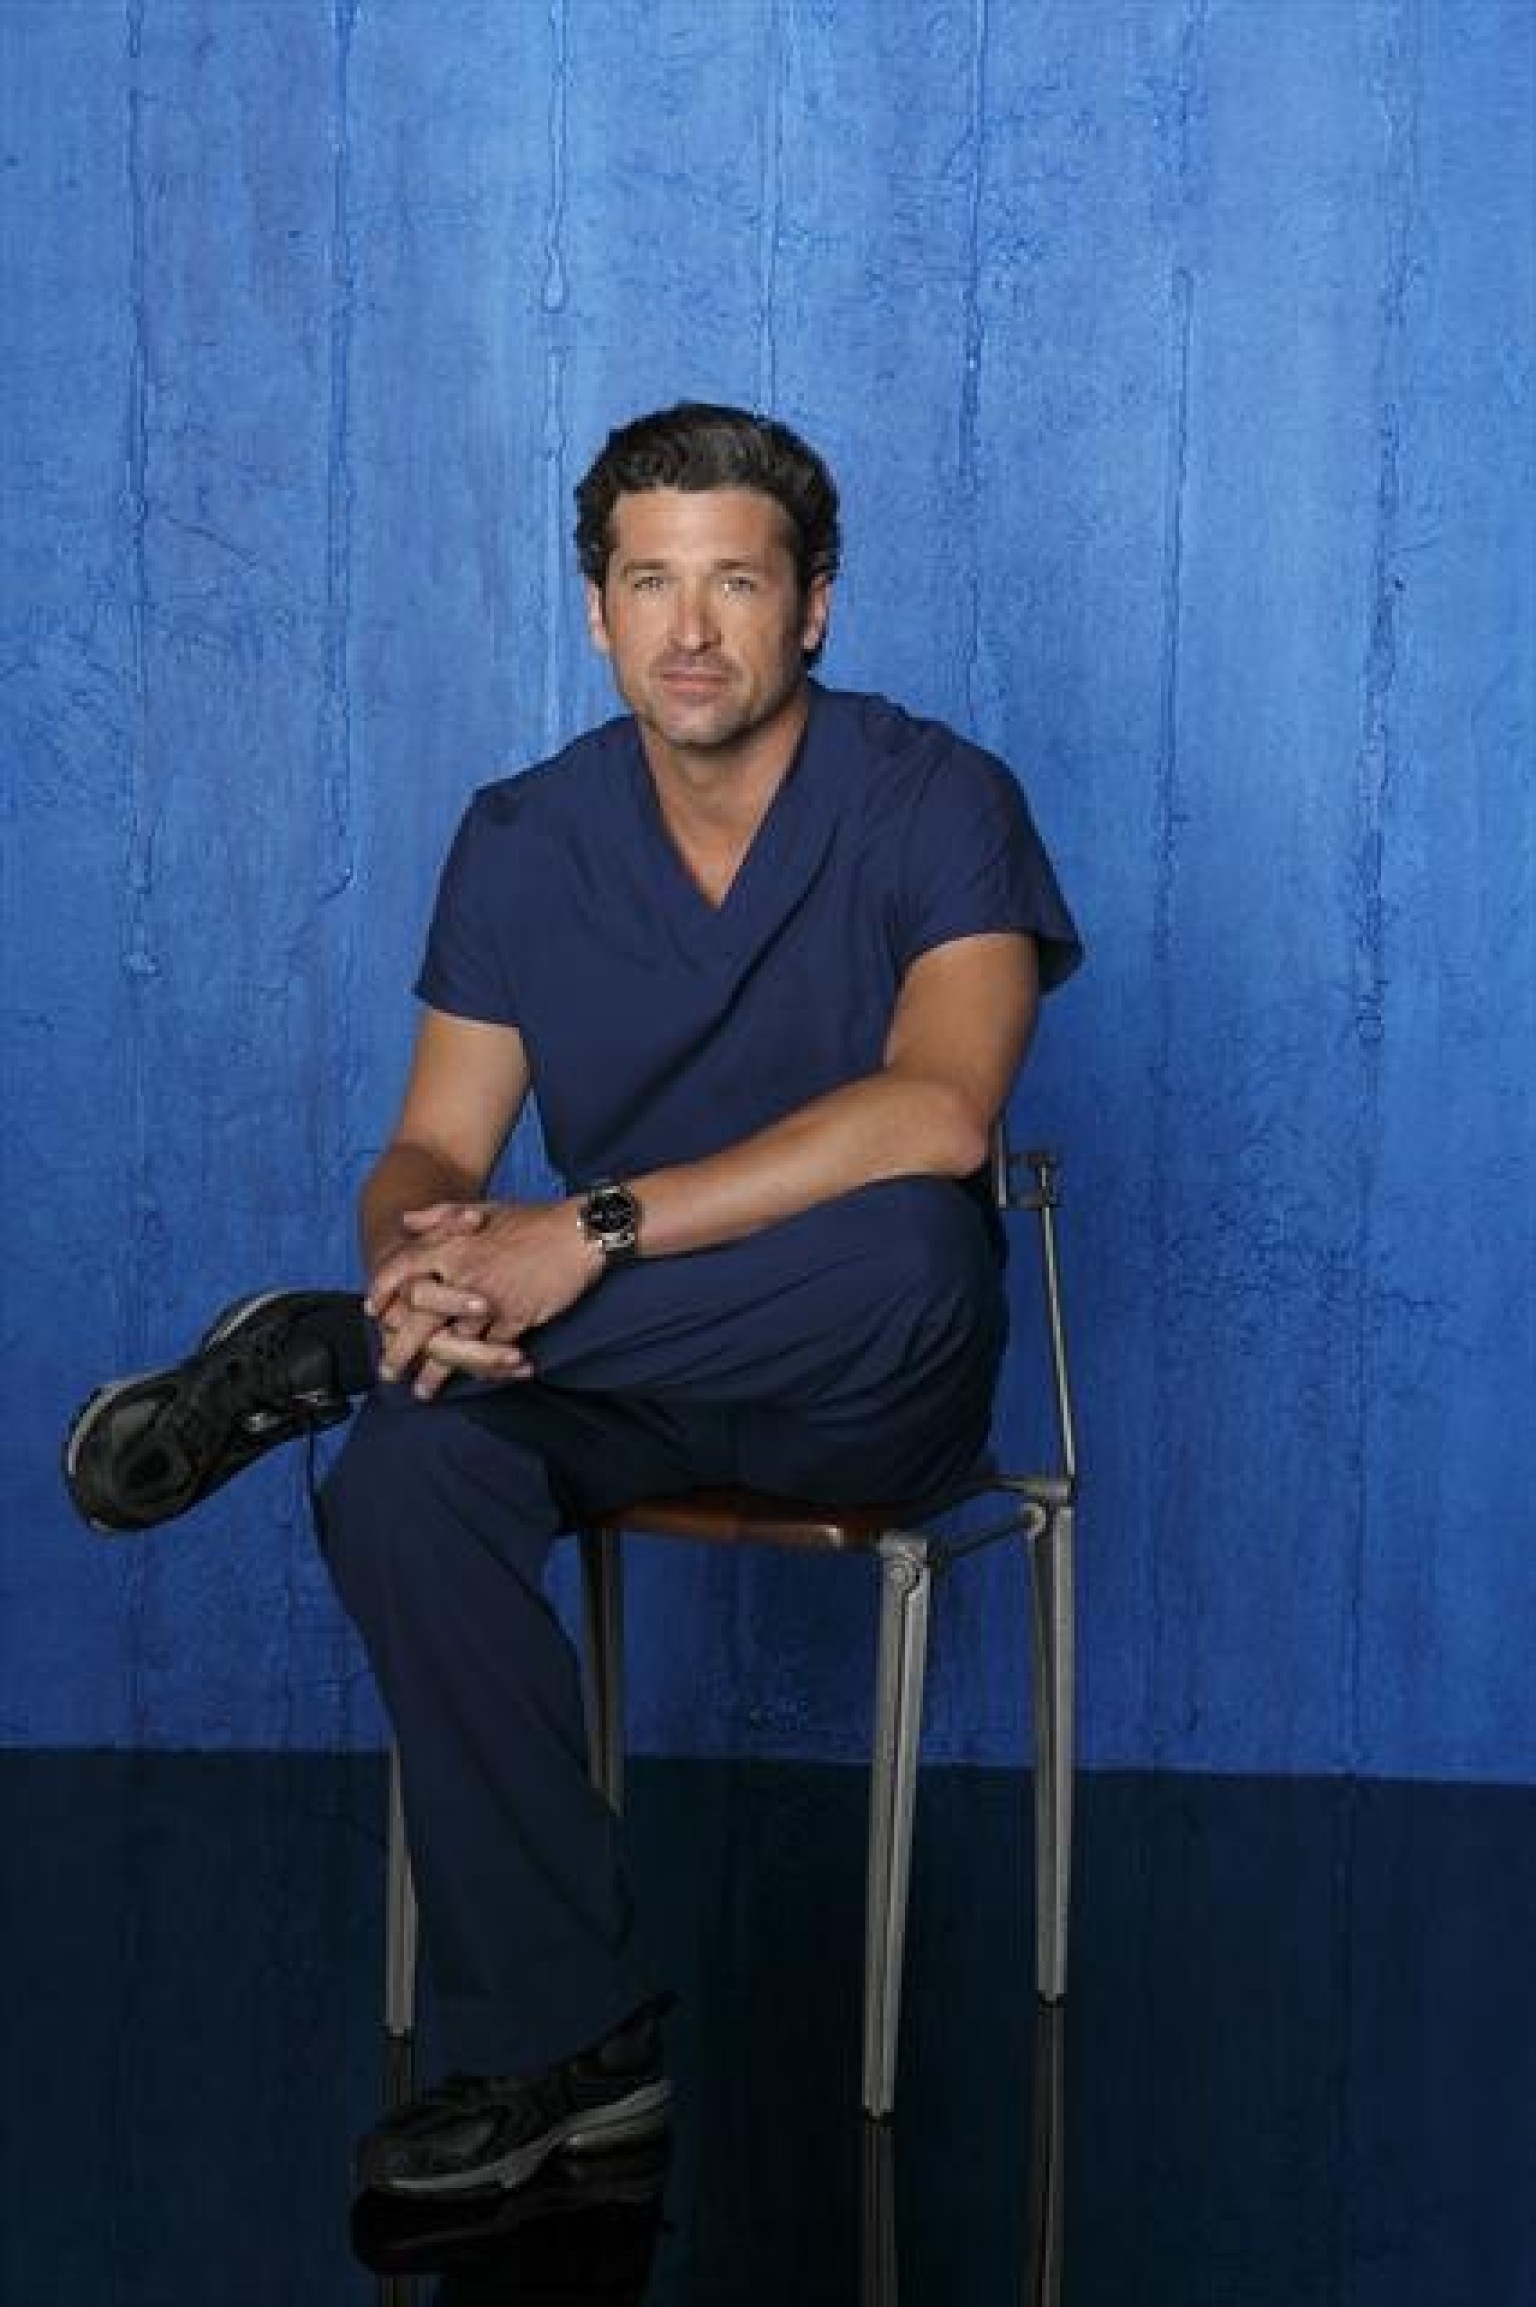 Greys Anatomy season 12 - Wikipedia